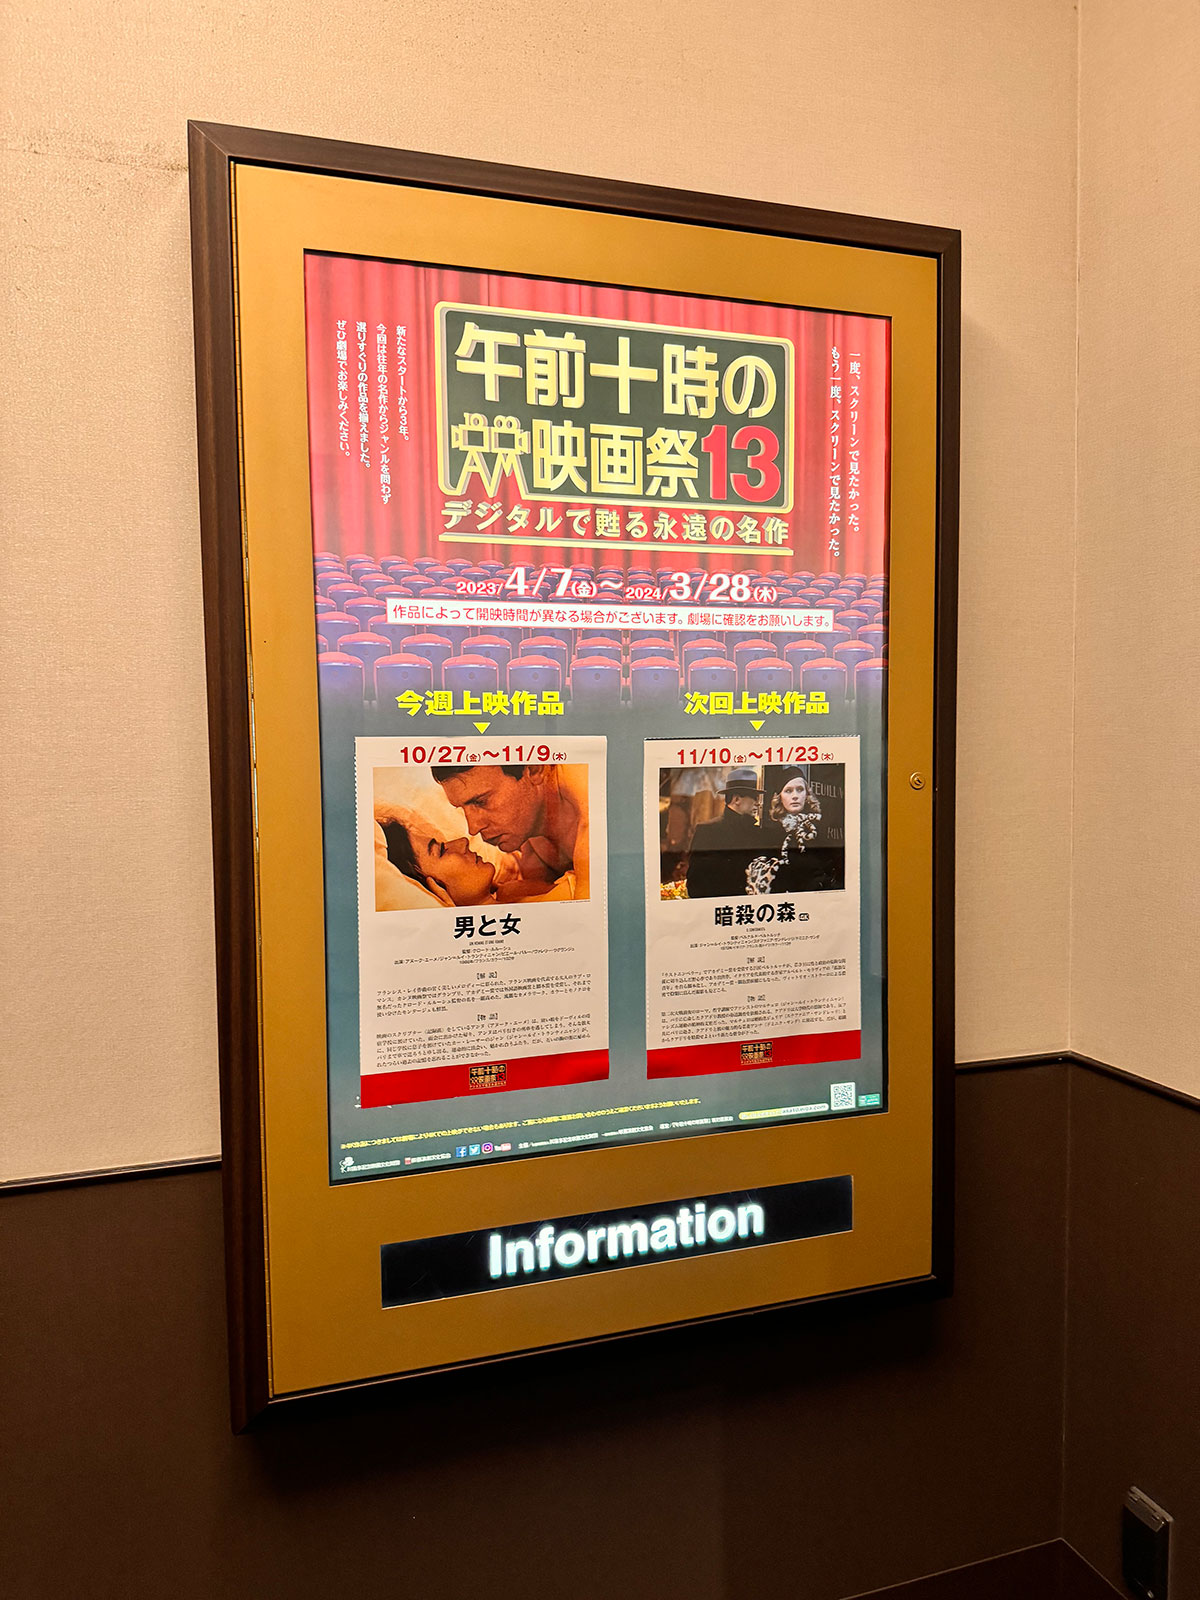 TOHOシネマズ日本橋、エレベーター正面に掲示された『男と女』上映当時の午前十時の映画祭13案内ポスター。